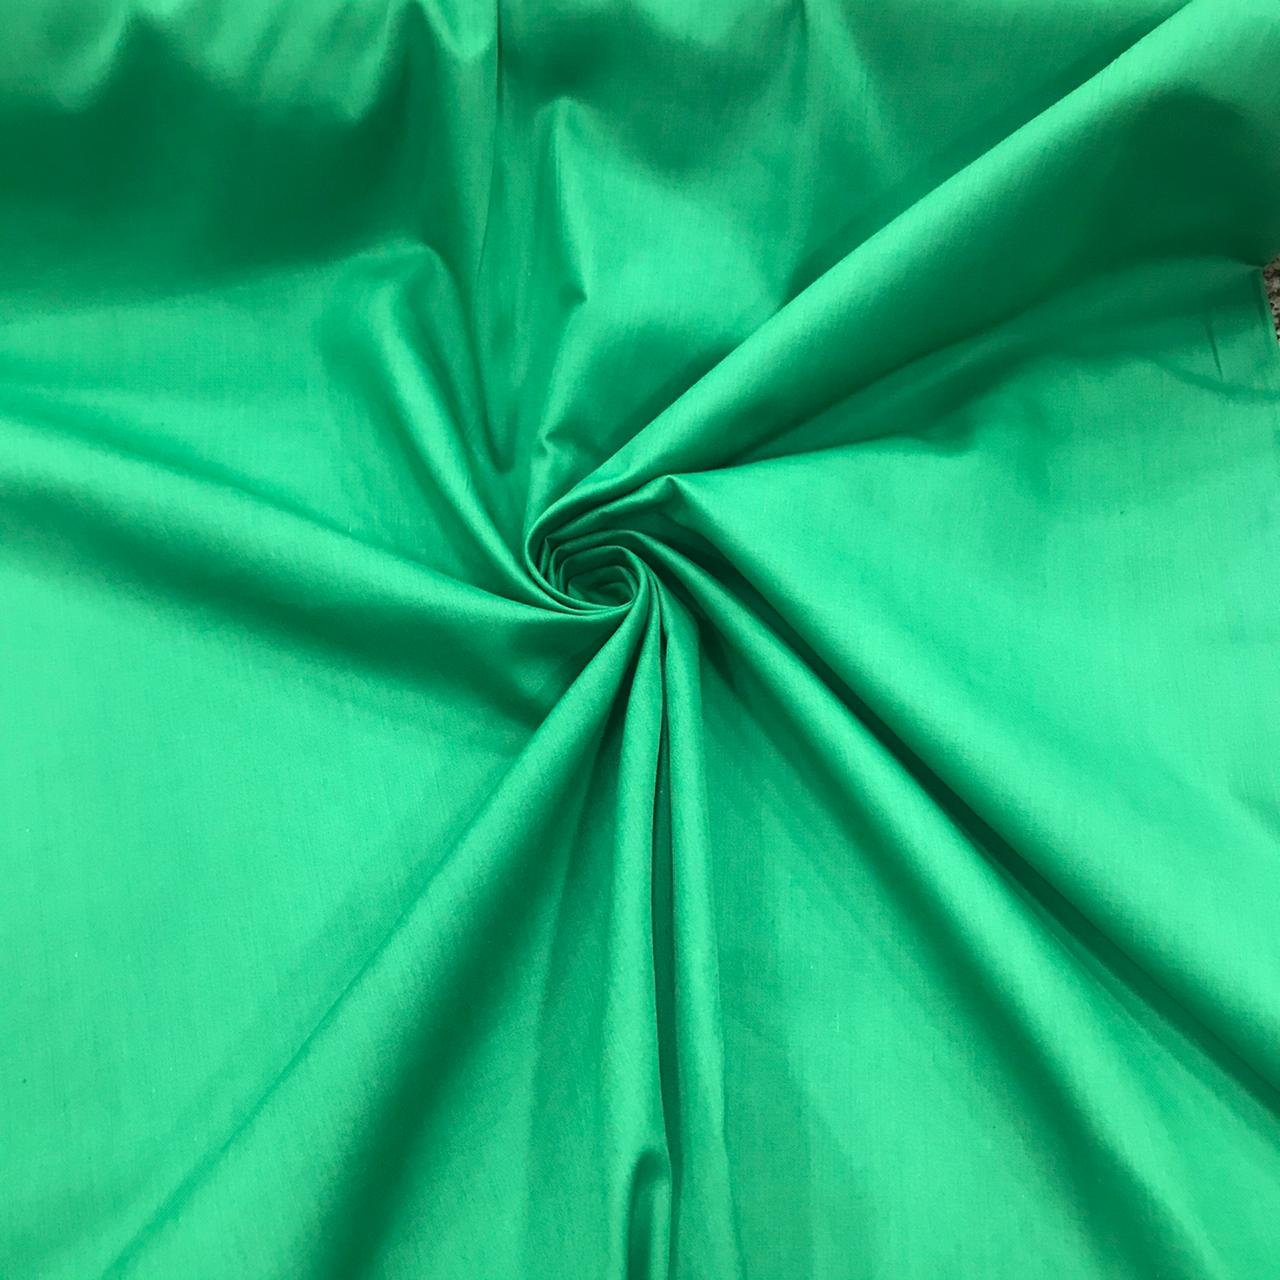 Tecido Tricoline Estampado Xadrez Verde Bandeira